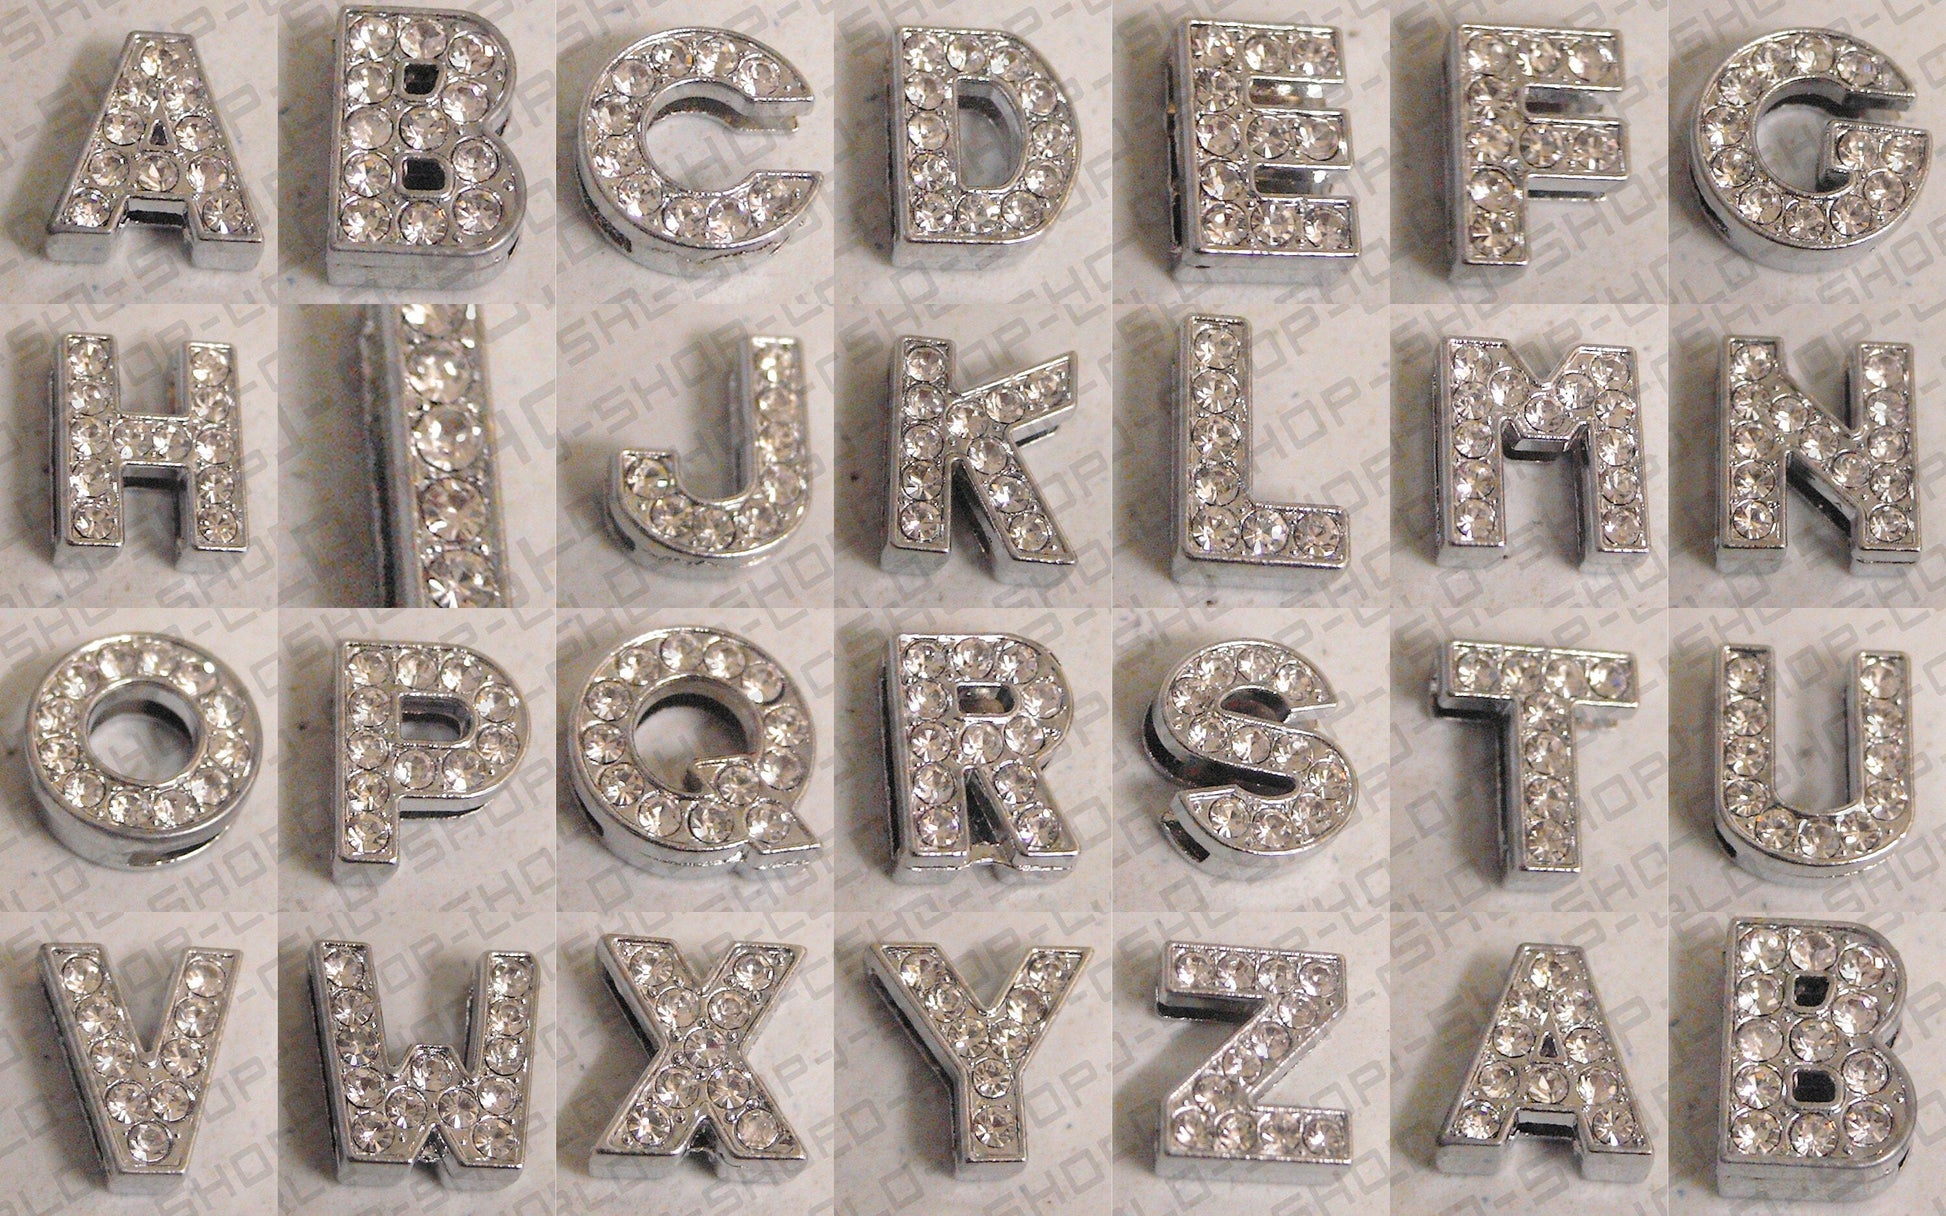 10 PCs Silver Or Gold Slide Letters Capital Letter 8mm Slider Spacer Beads Pendant Charm, Finding, Rhinestone for Bracelet & Necklace